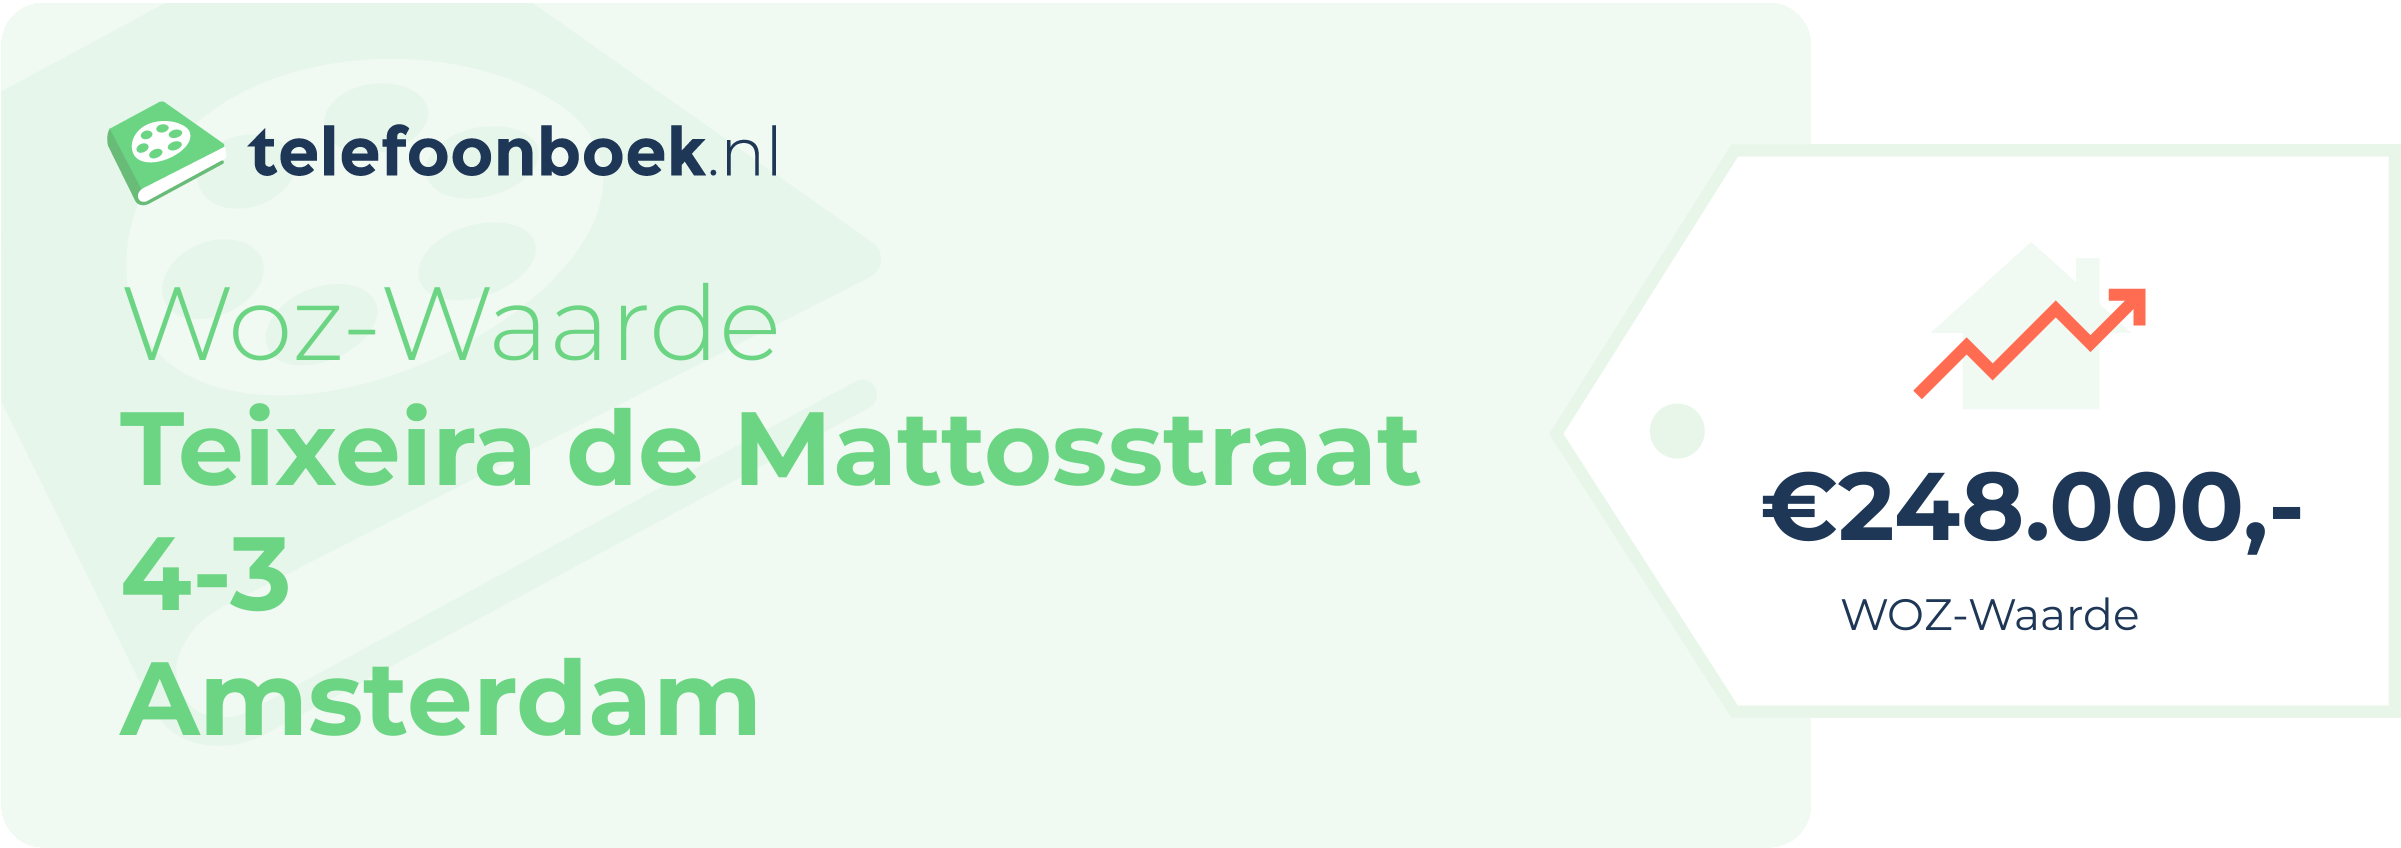 WOZ-waarde Teixeira De Mattosstraat 4-3 Amsterdam